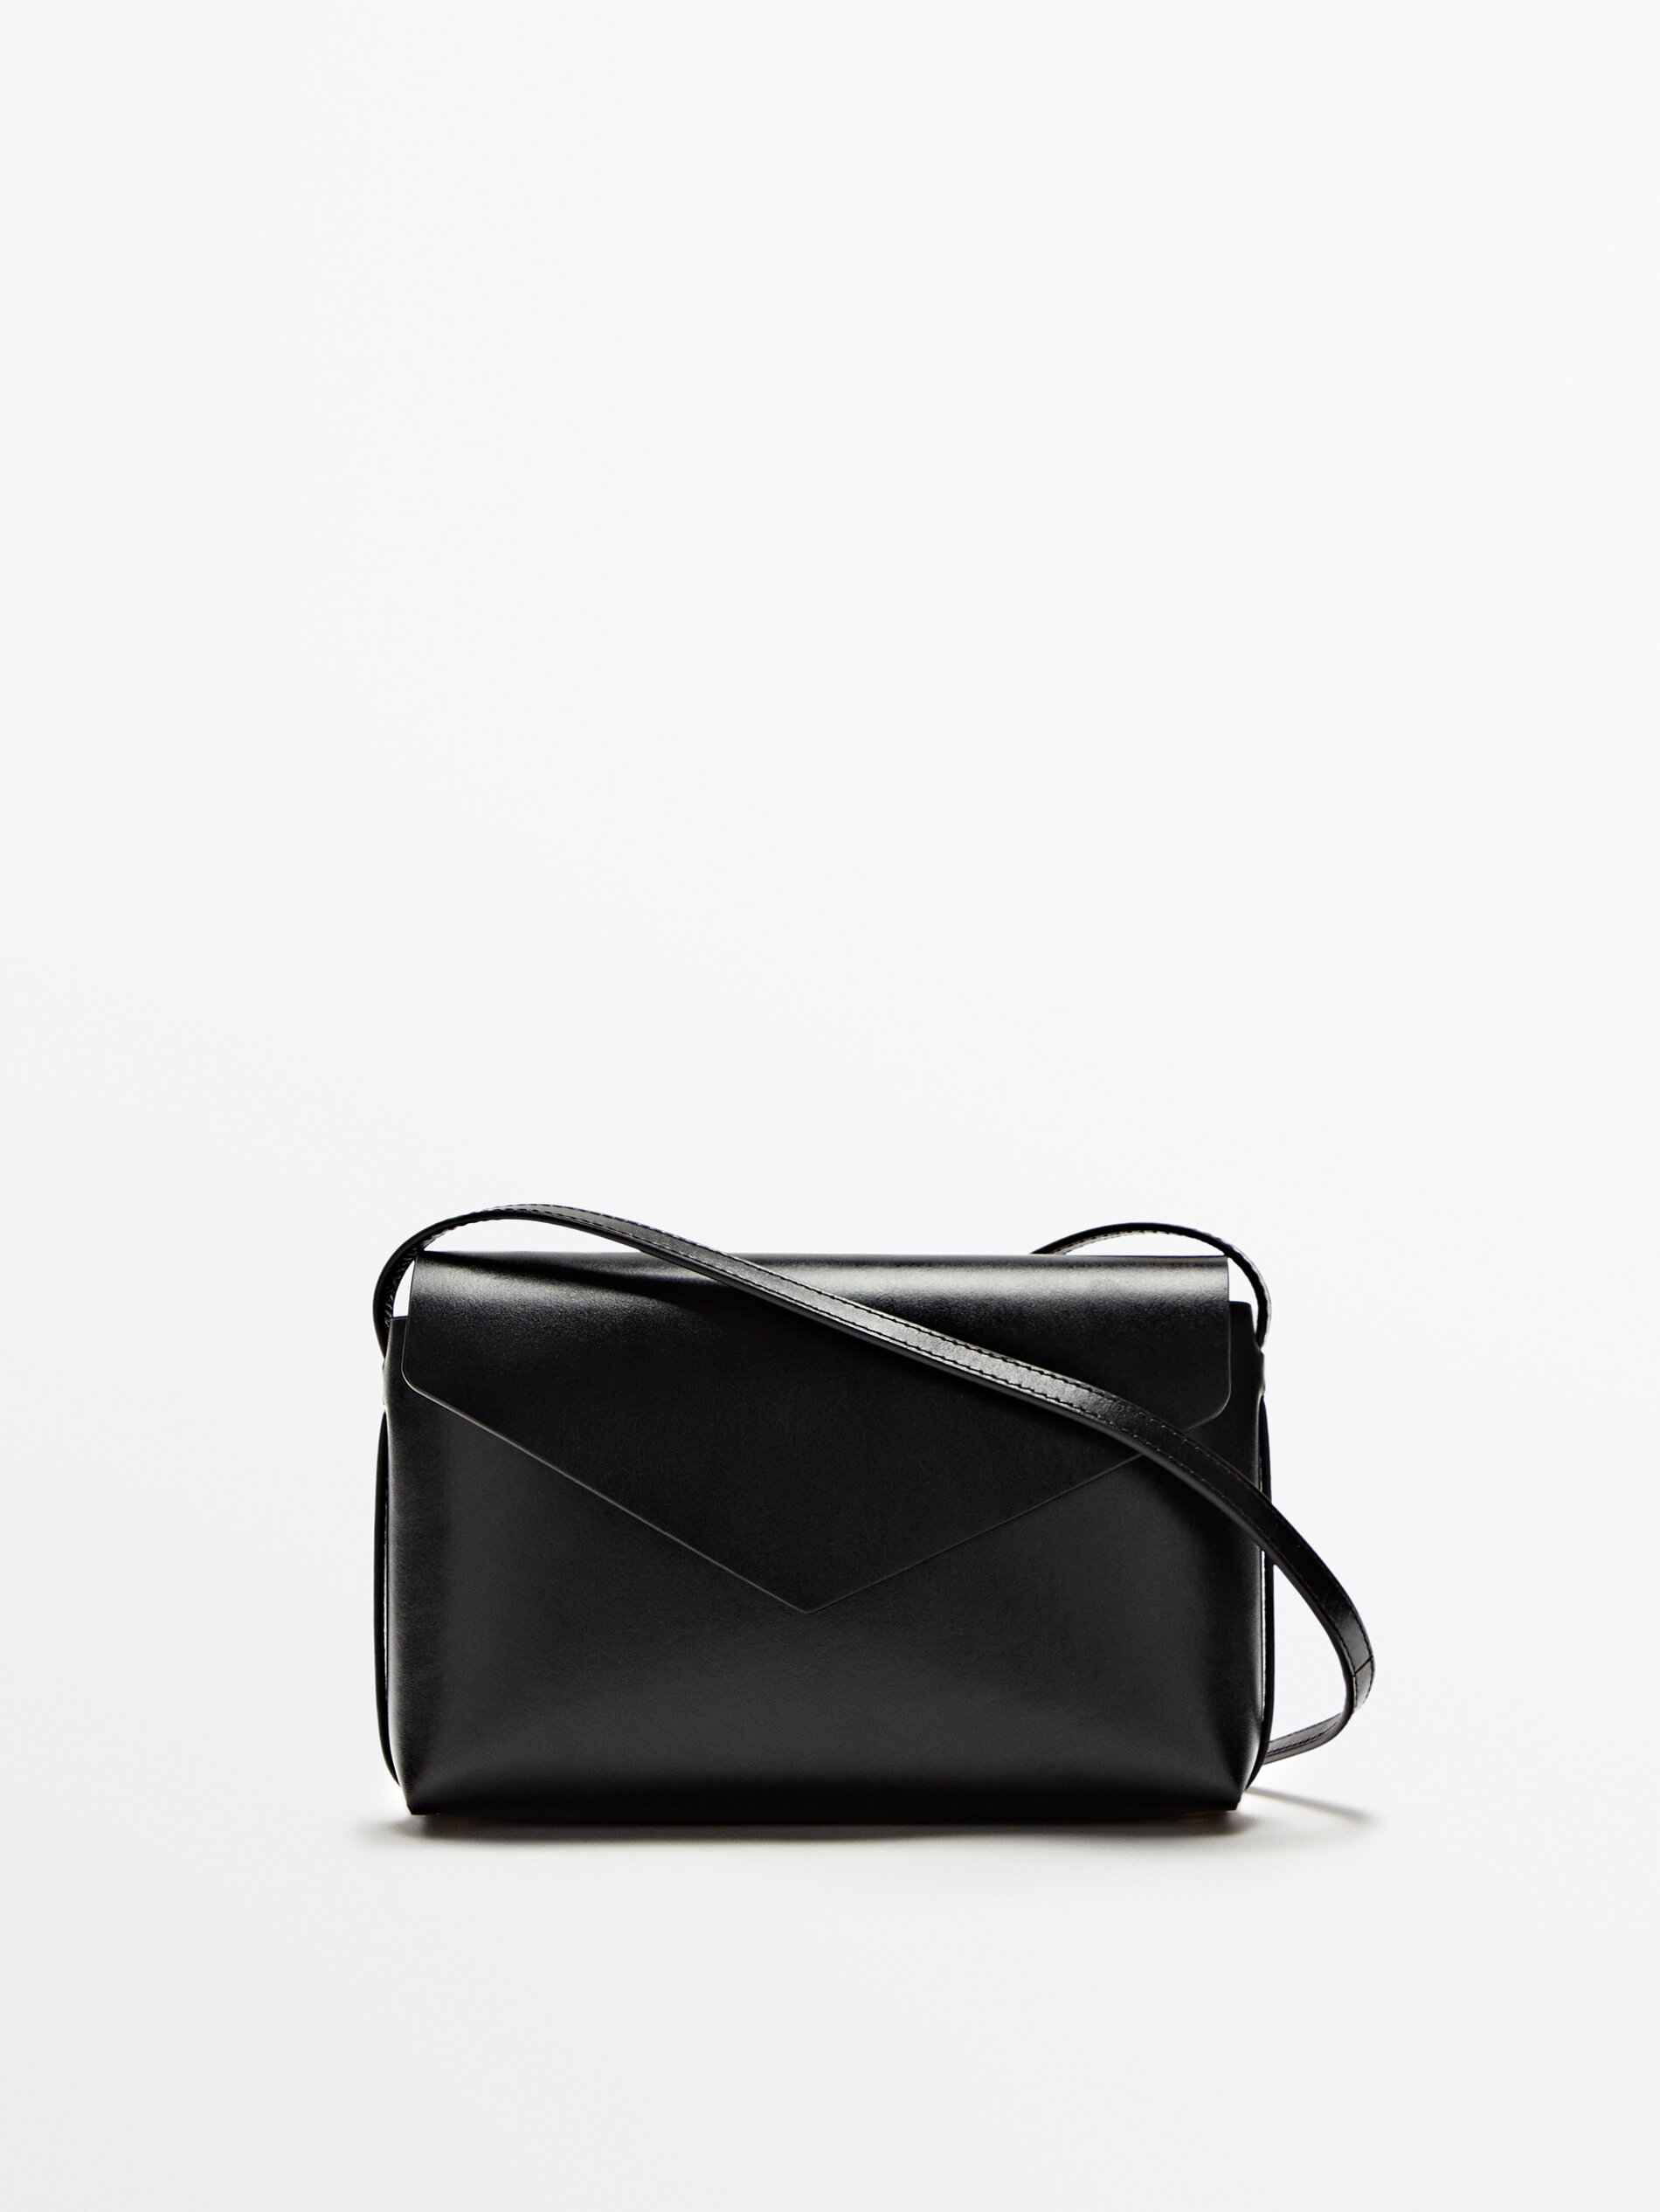 Bags for Women - Massimo Dutti Canada